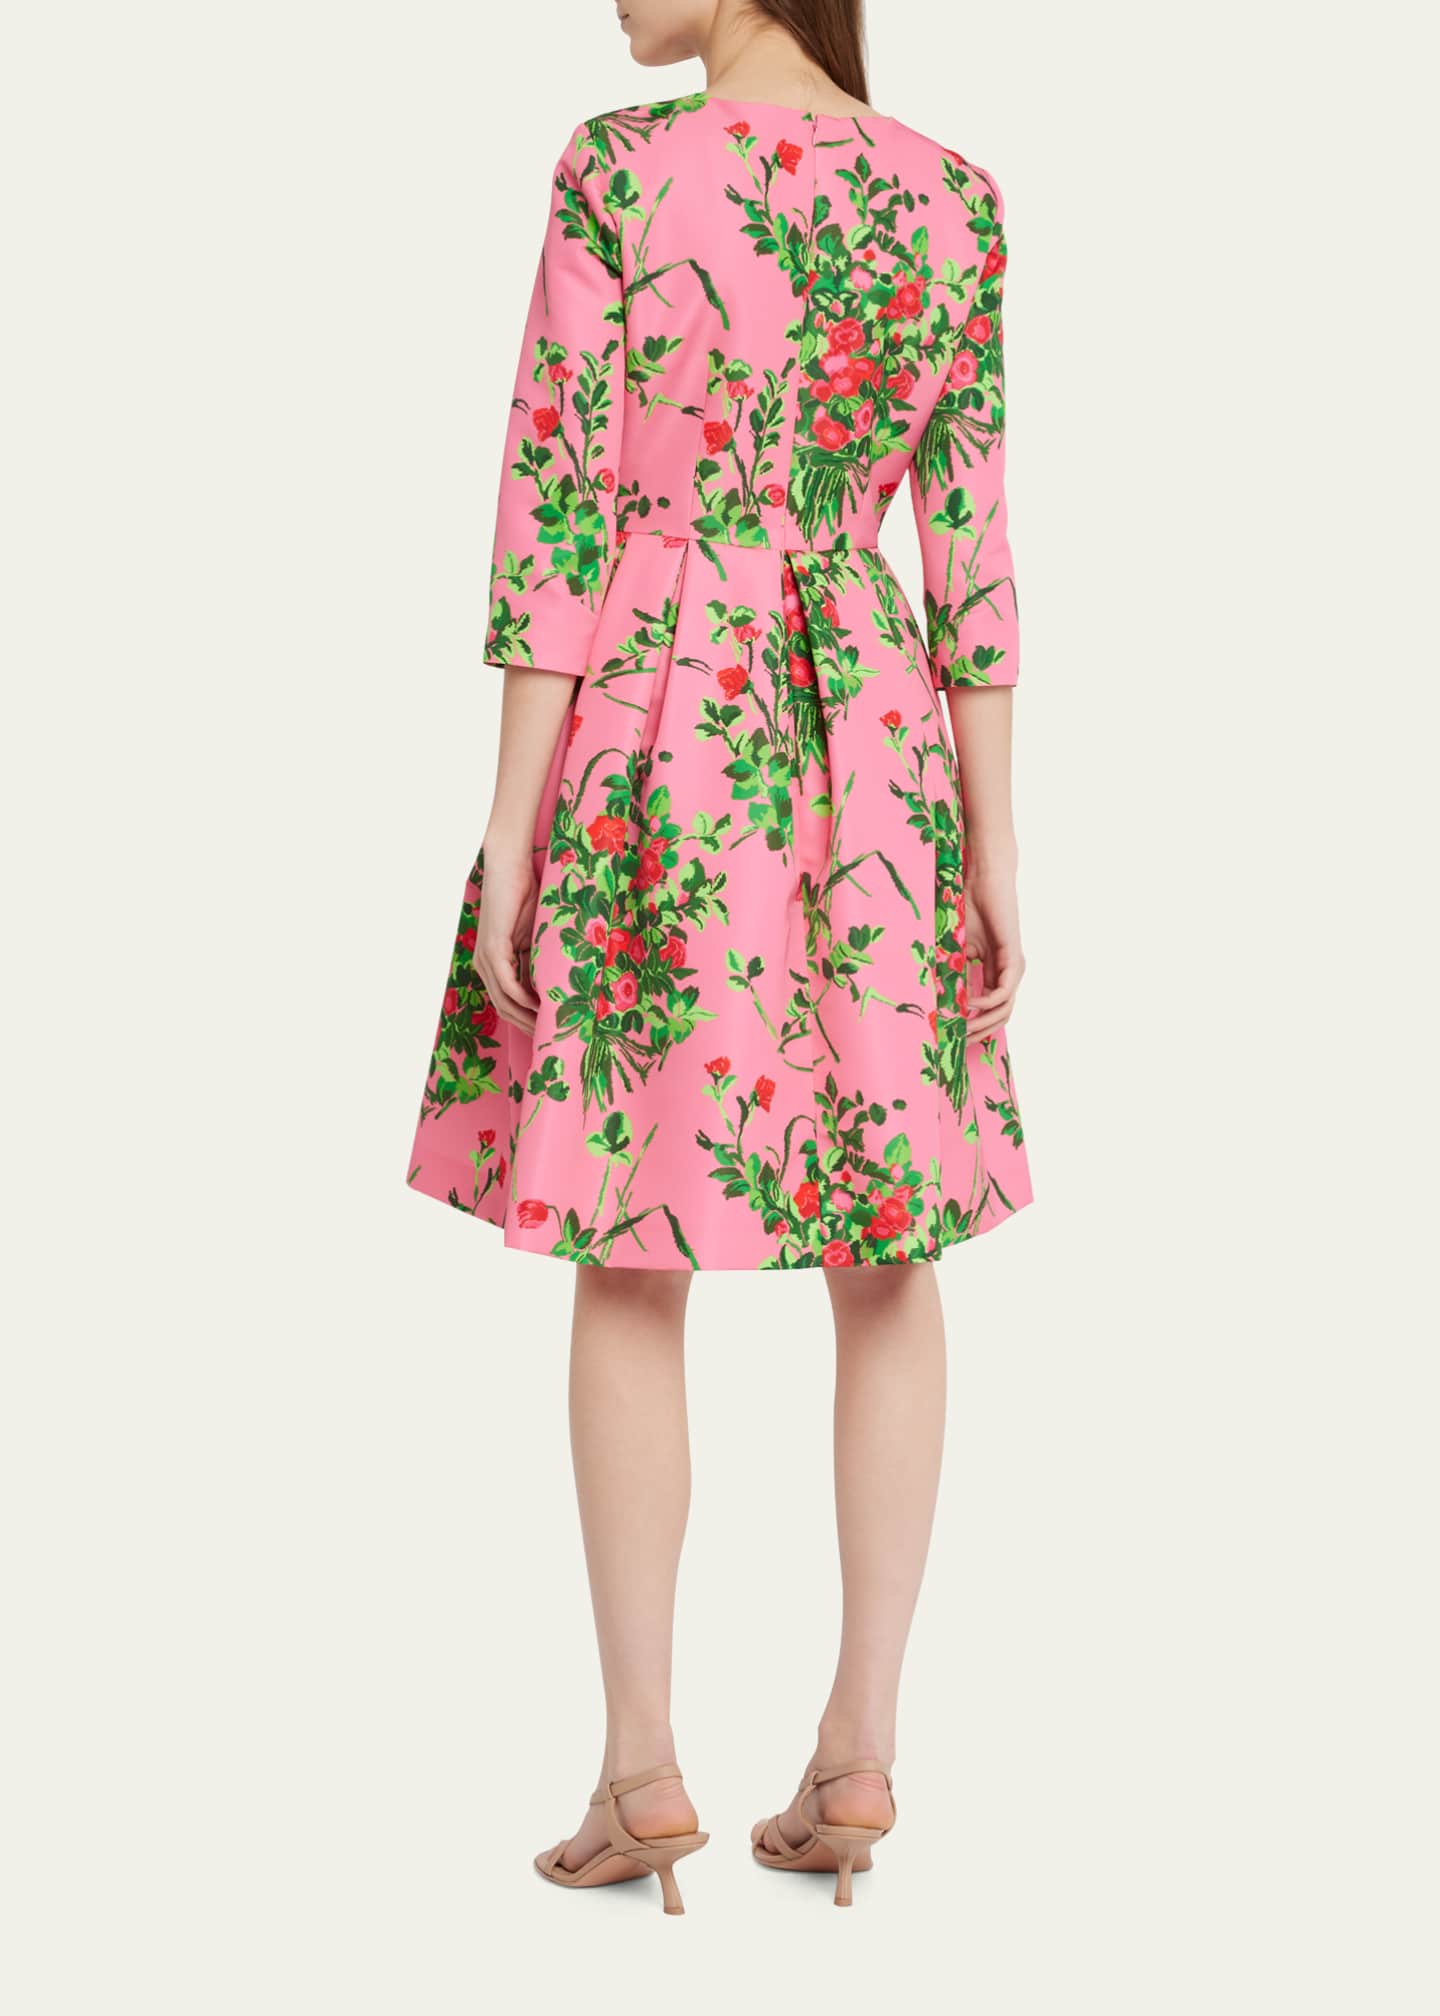 Carolina Herrera Floral Print Flared Knee-Length Dress - Bergdorf Goodman